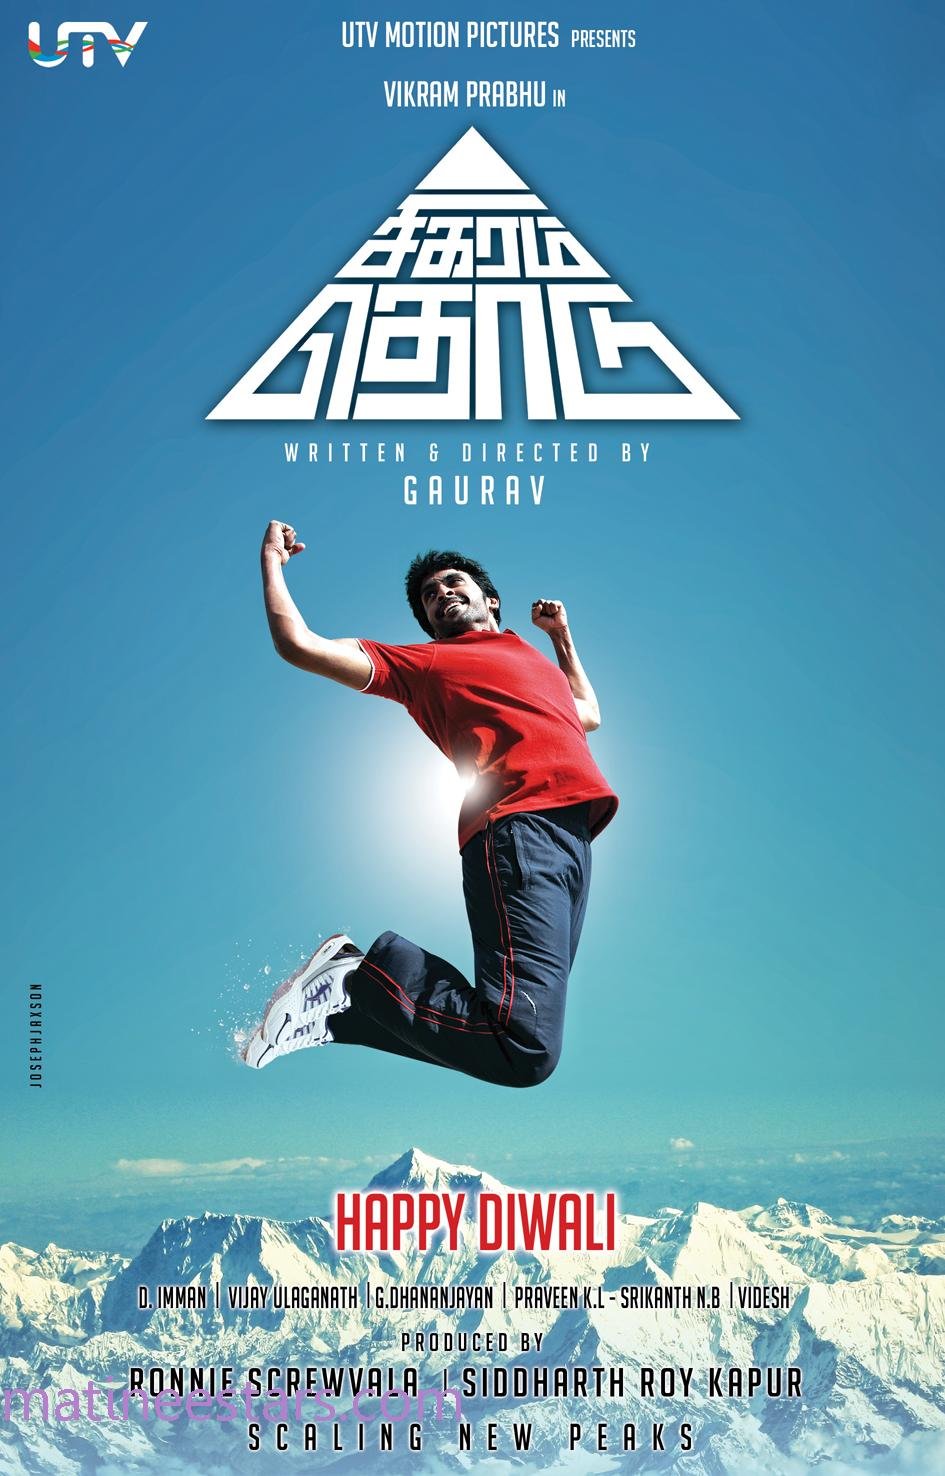 Tamil poster of the movie Sigaram Thodu